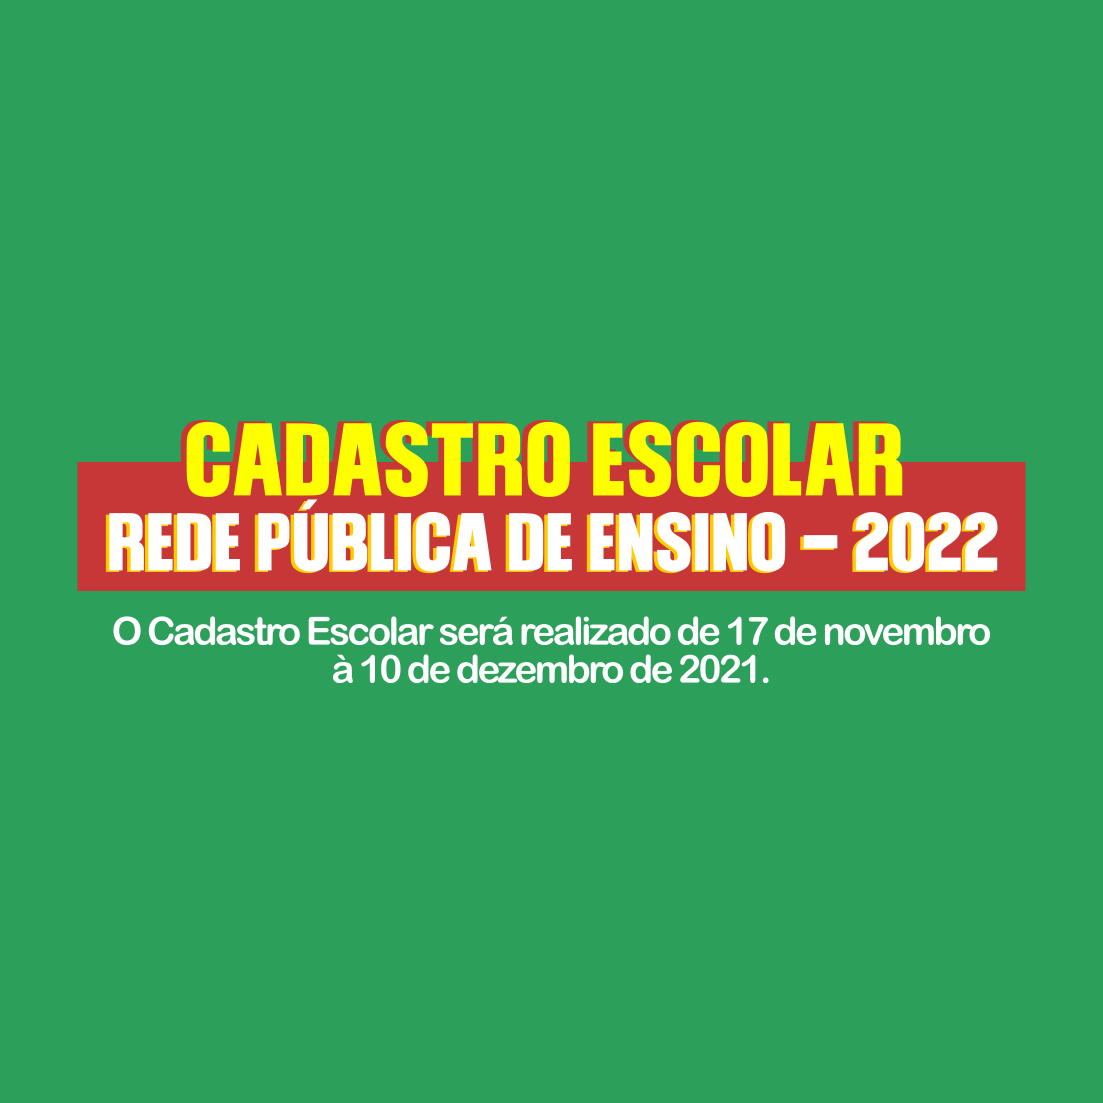 You are currently viewing CADASTRO ESCOLAR 2022